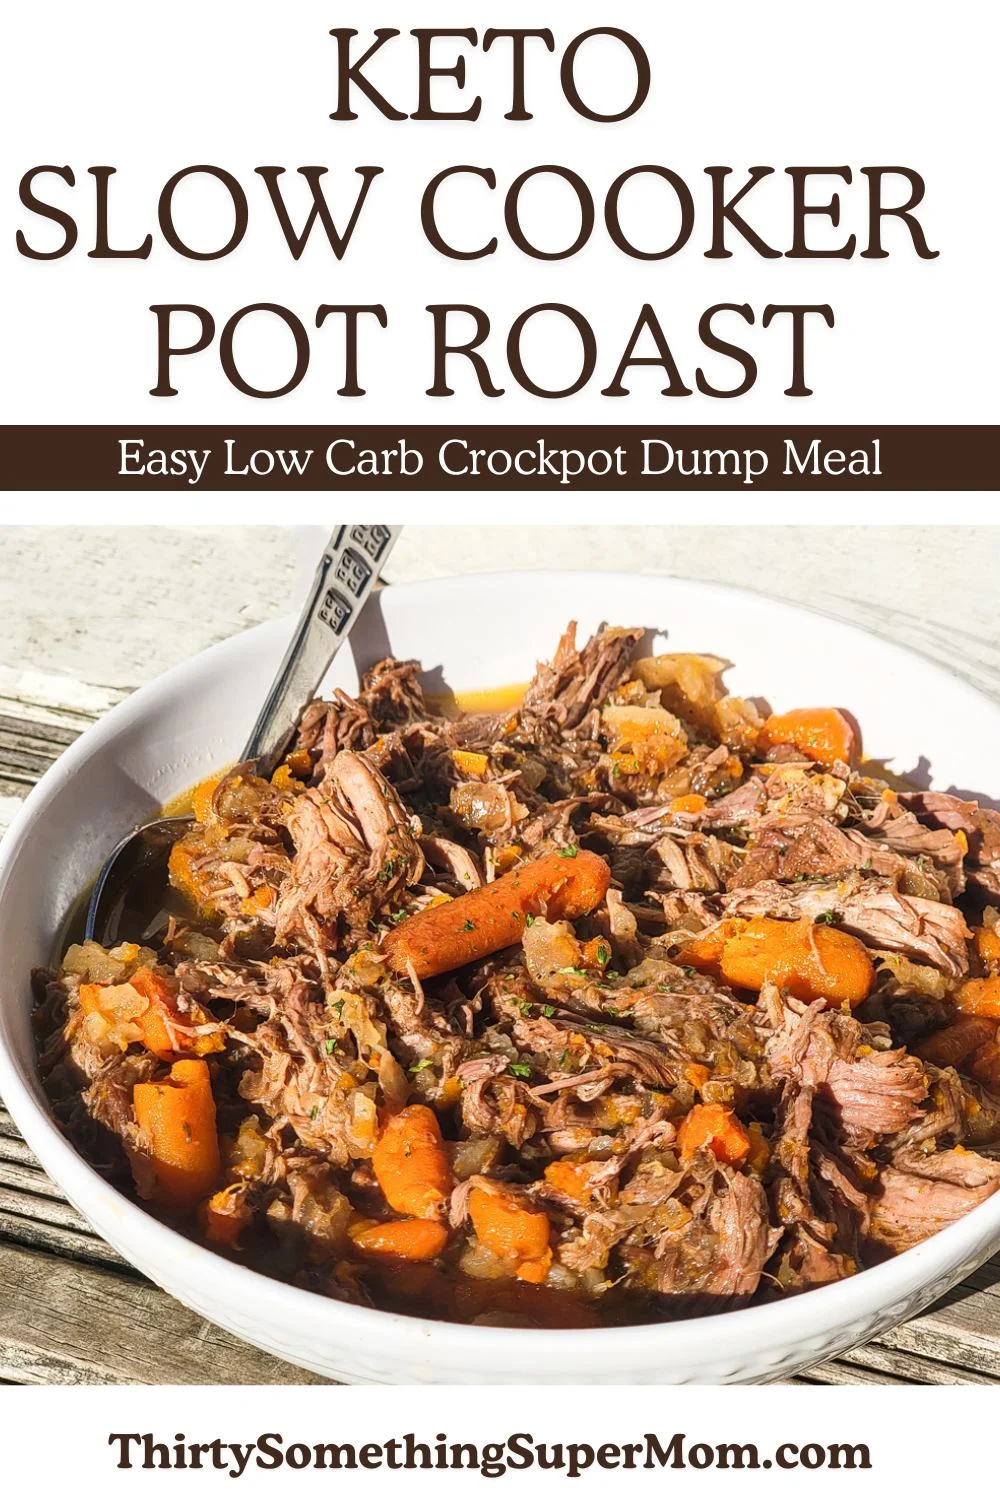 Low Carb Crock Pot Recipes - Easy Keto Slow Cooker Ideas ...